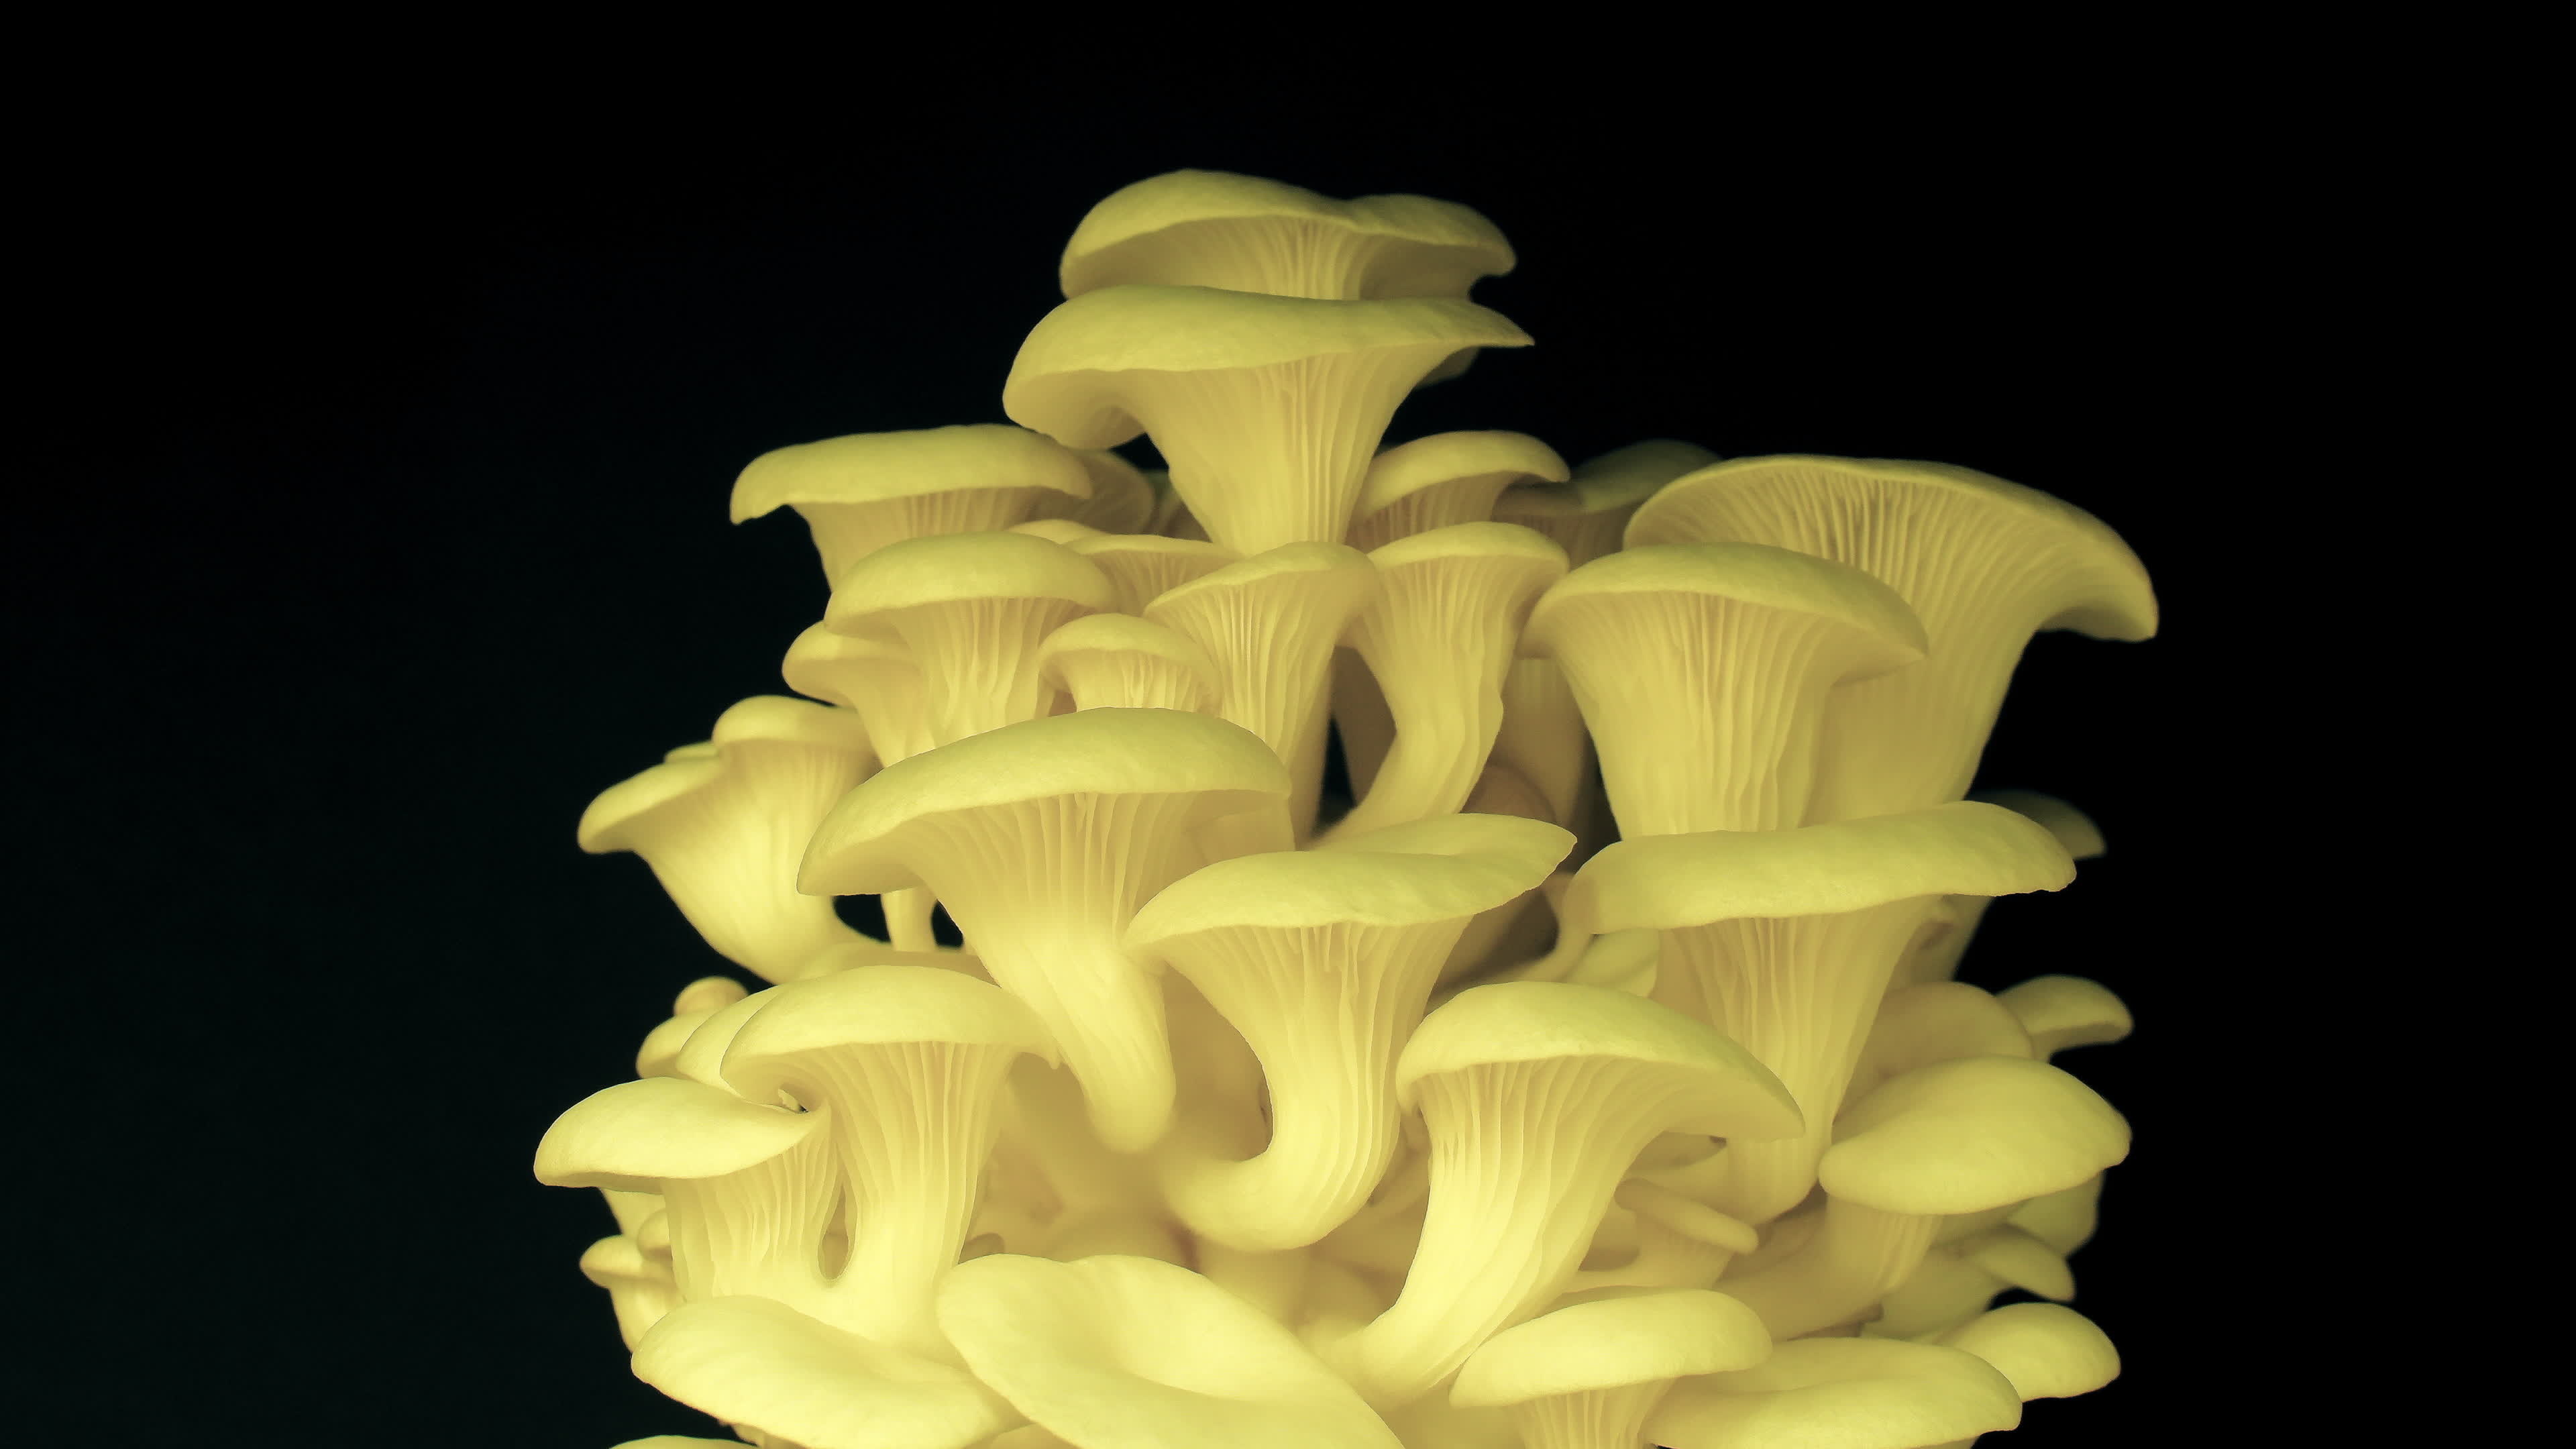 Oyster mushrooms, Growing process, Soil time lapse, Stock video footage, 3840x2160 4K Desktop